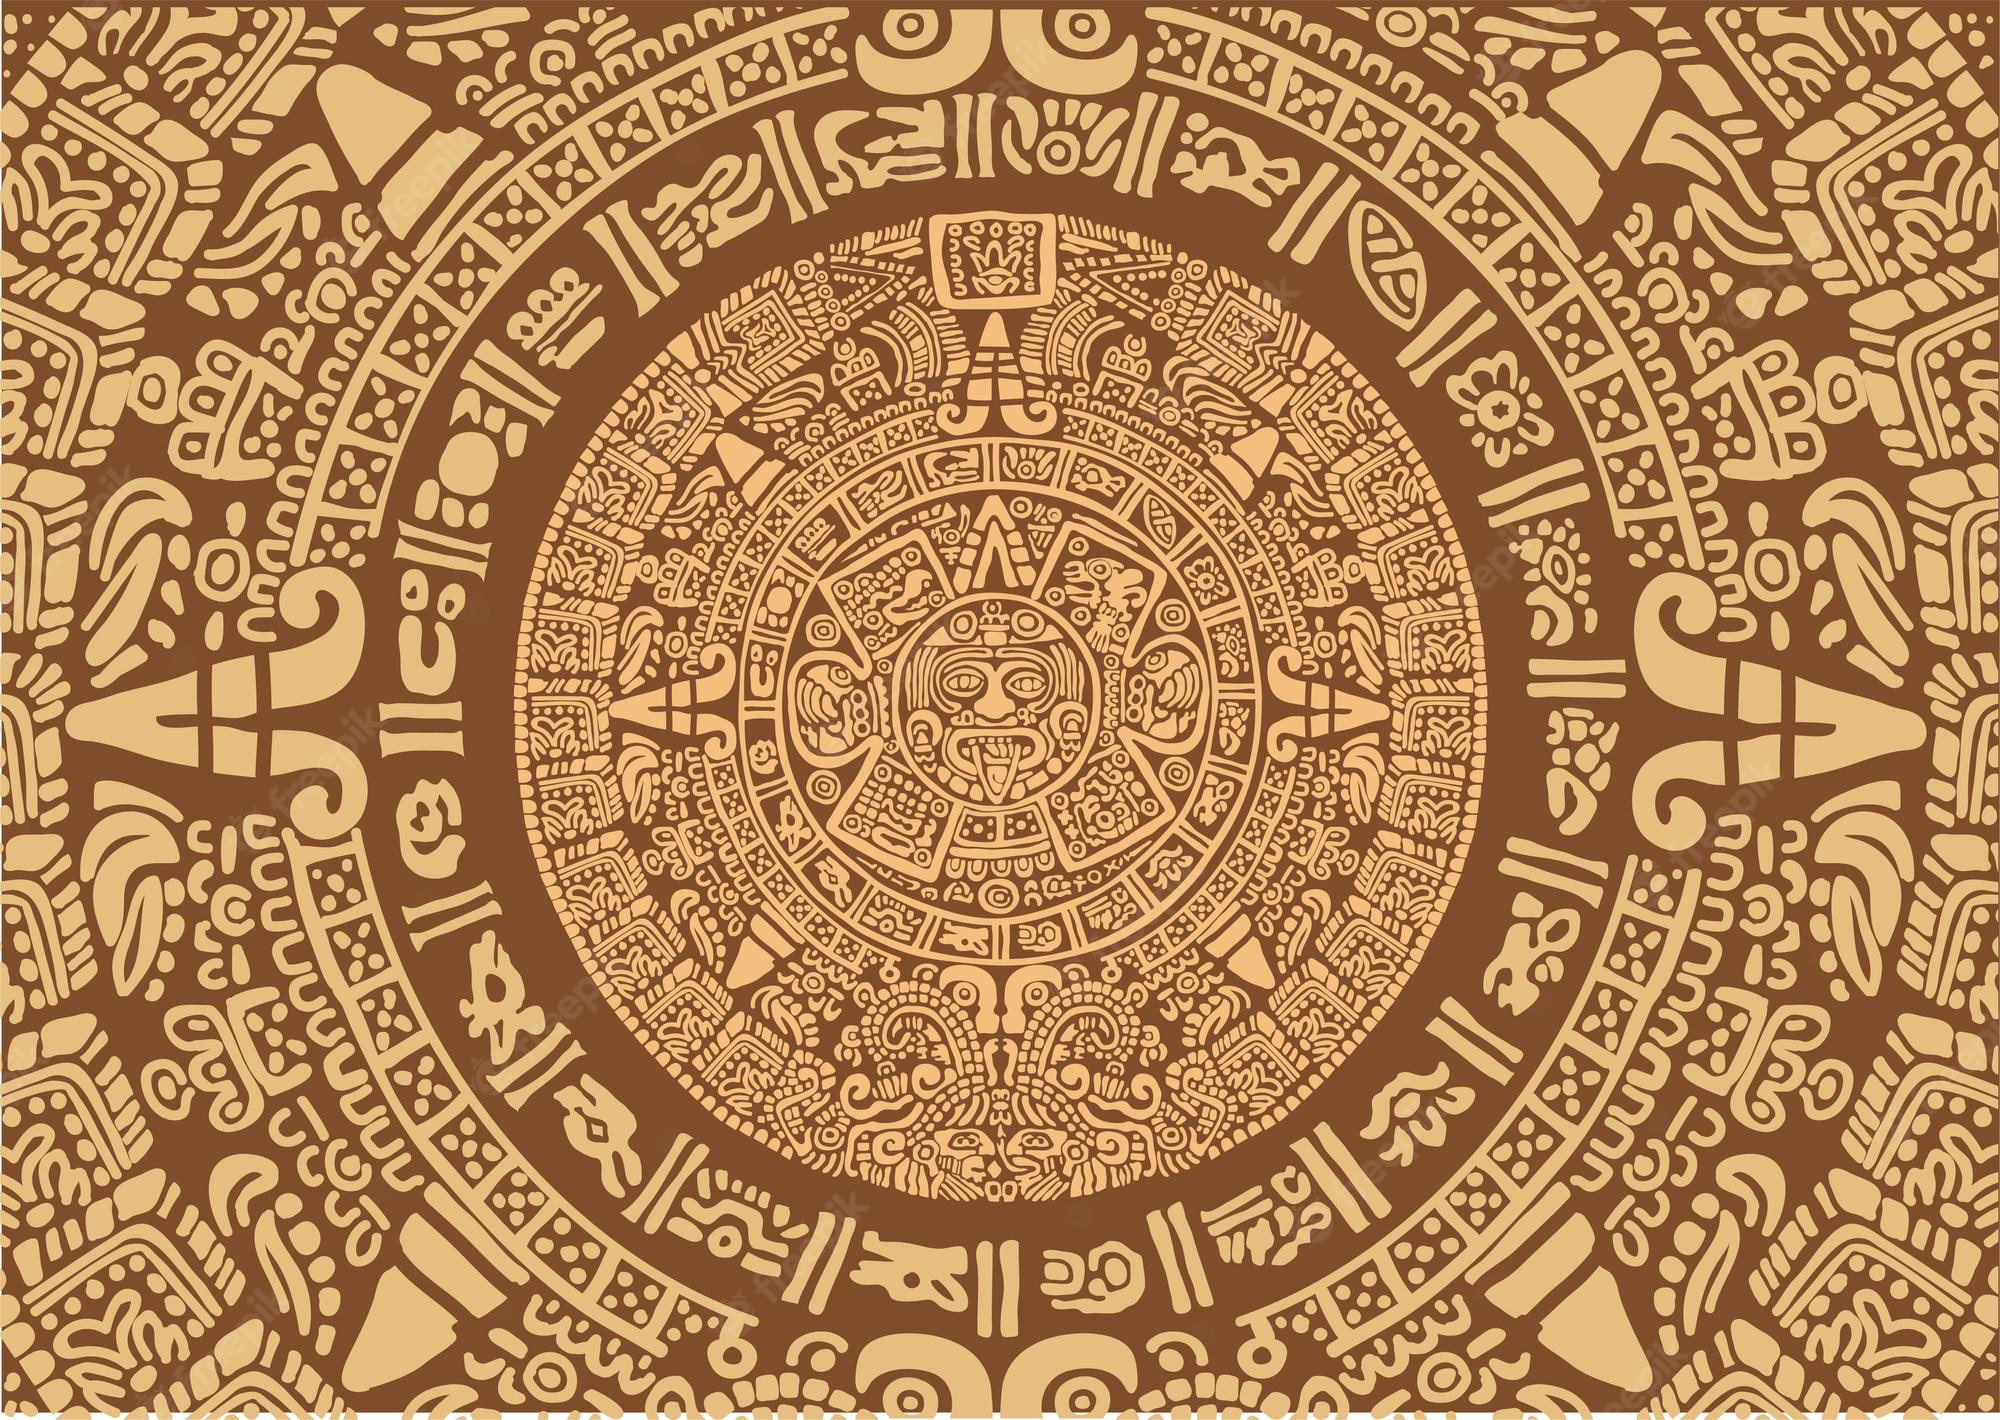 Ancient Mayan Symbols Image. Free Vectors, & PSD